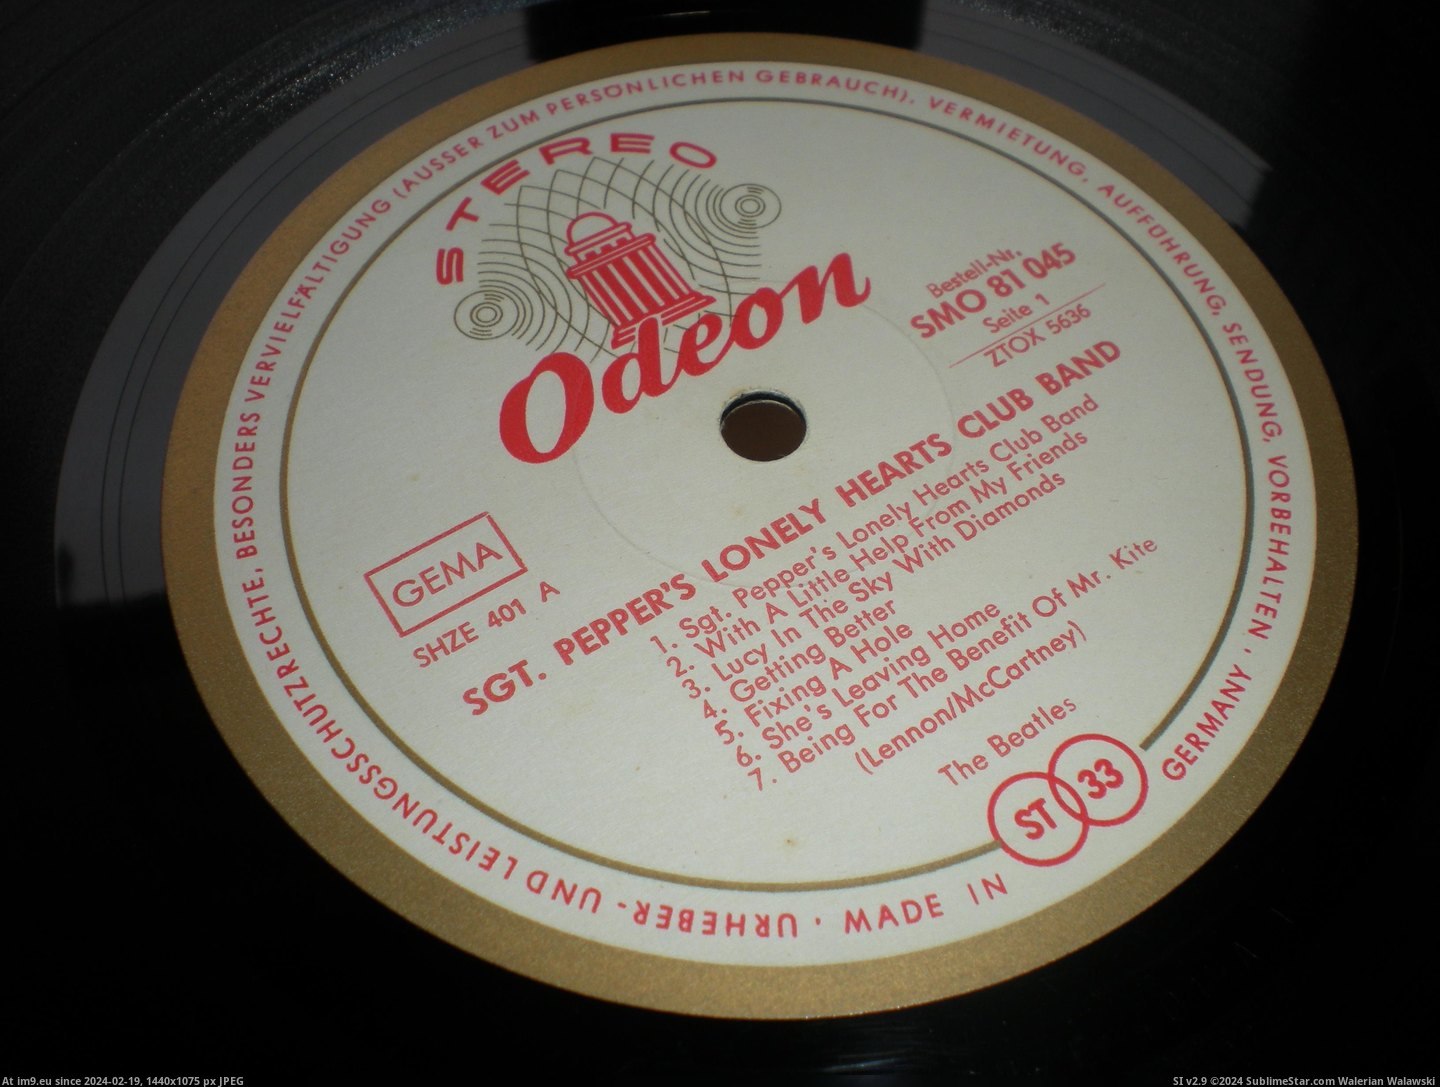 #Sgt  #Odeon Sgt ODEON 1 Pic. (Изображение из альбом new 1))